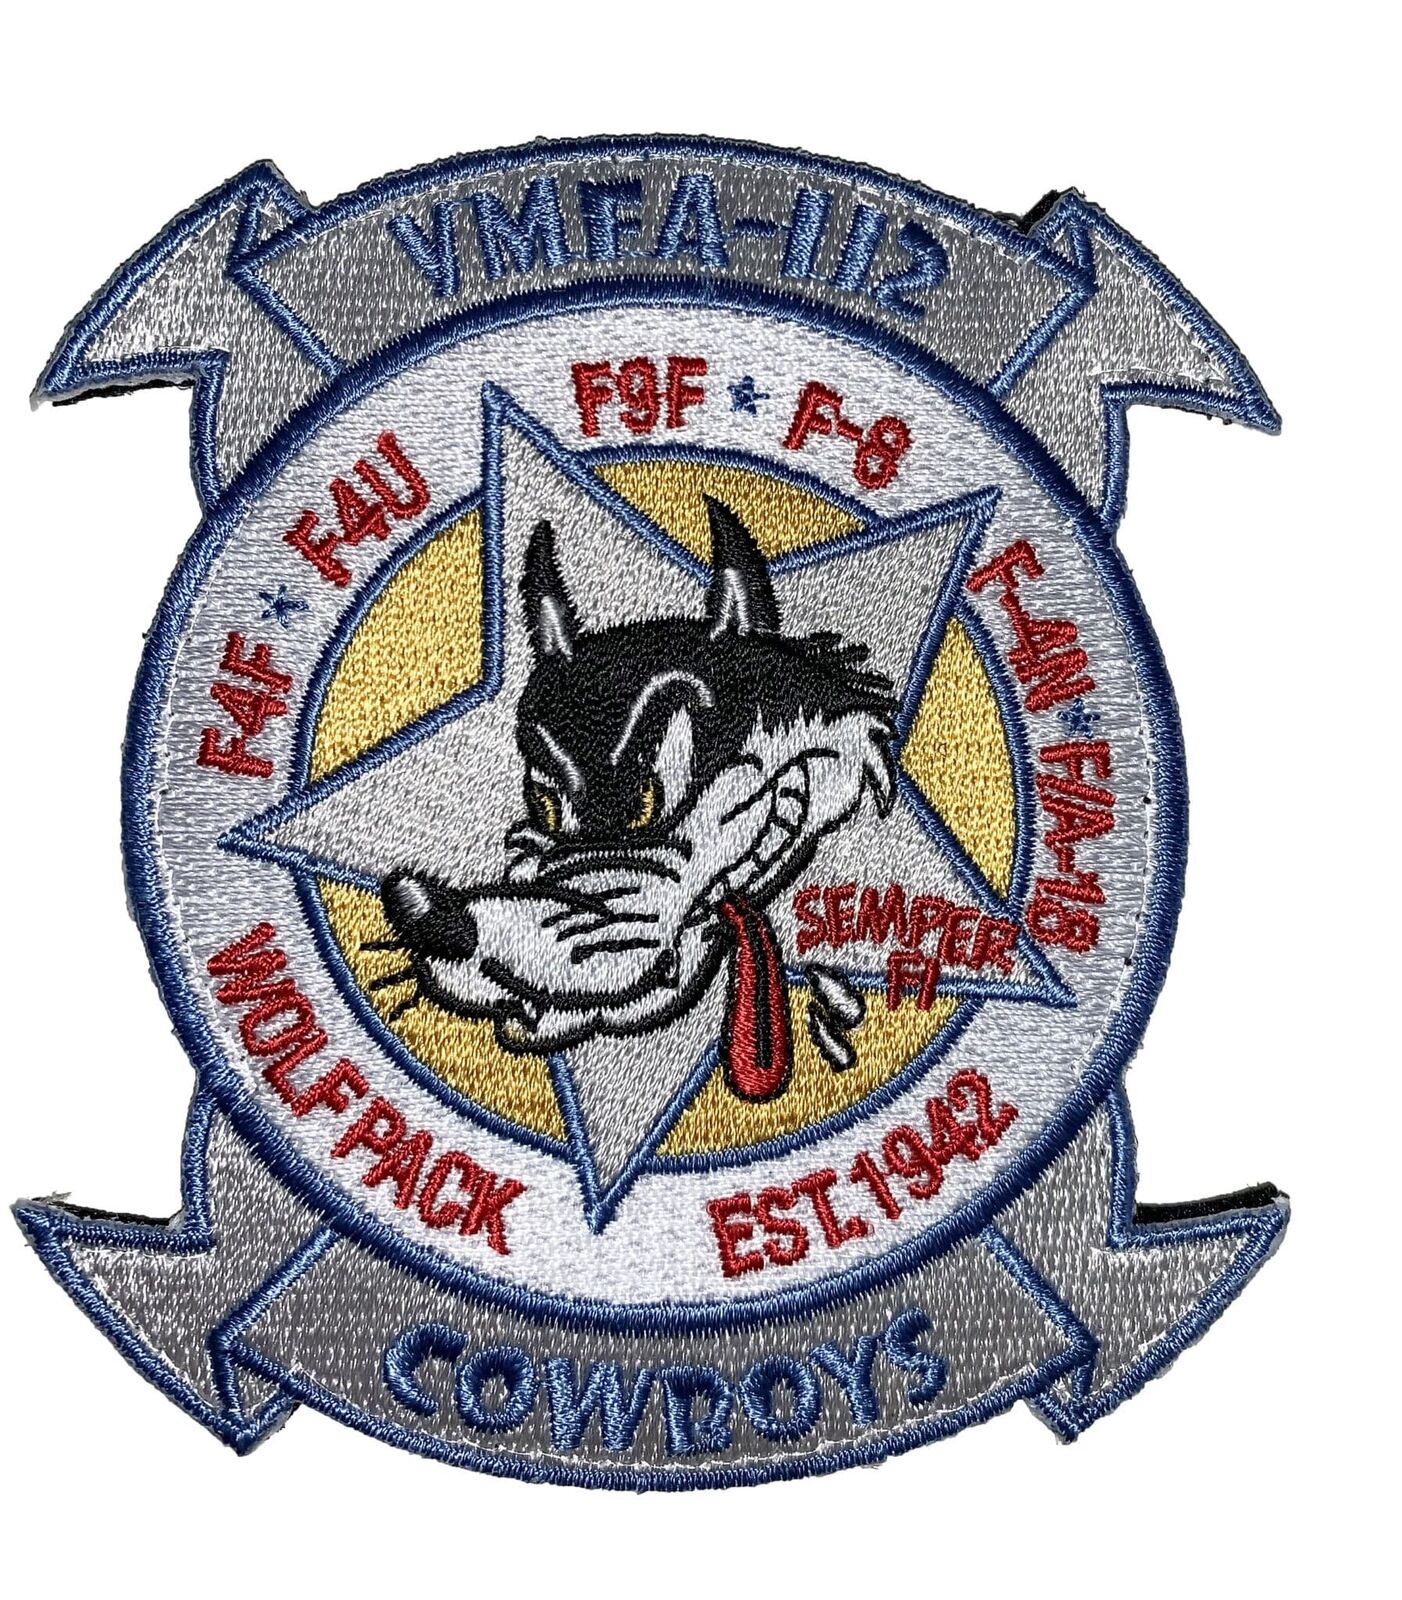 VMFA-112 Cowboys 2019 Squadron Patch –Plastic Backing